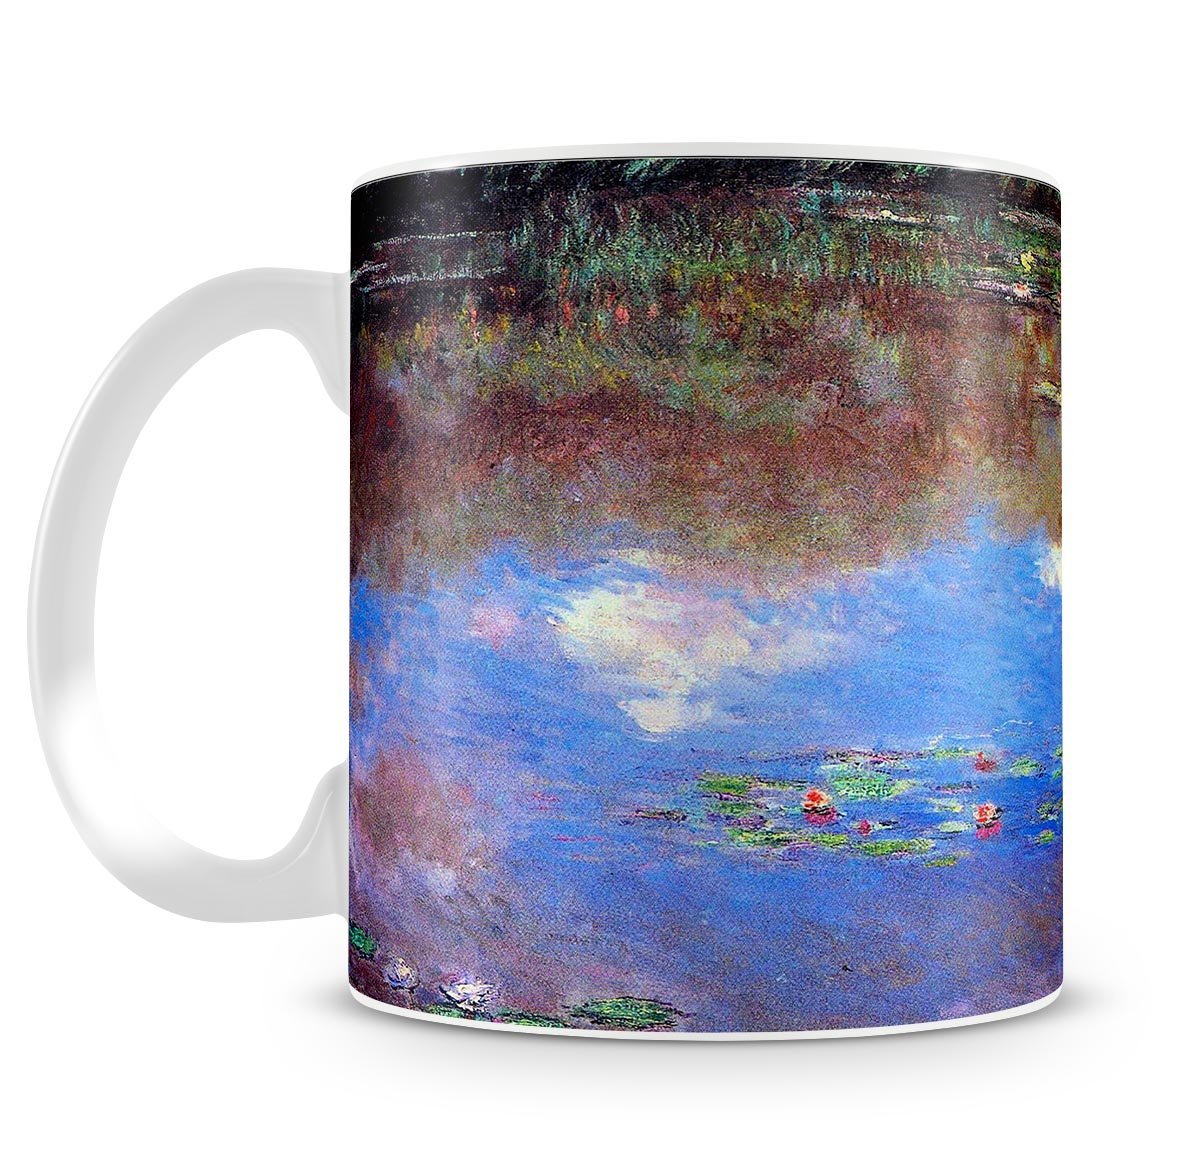 Water Lily Pond 4 by Monet Mug - Canvas Art Rocks - 4